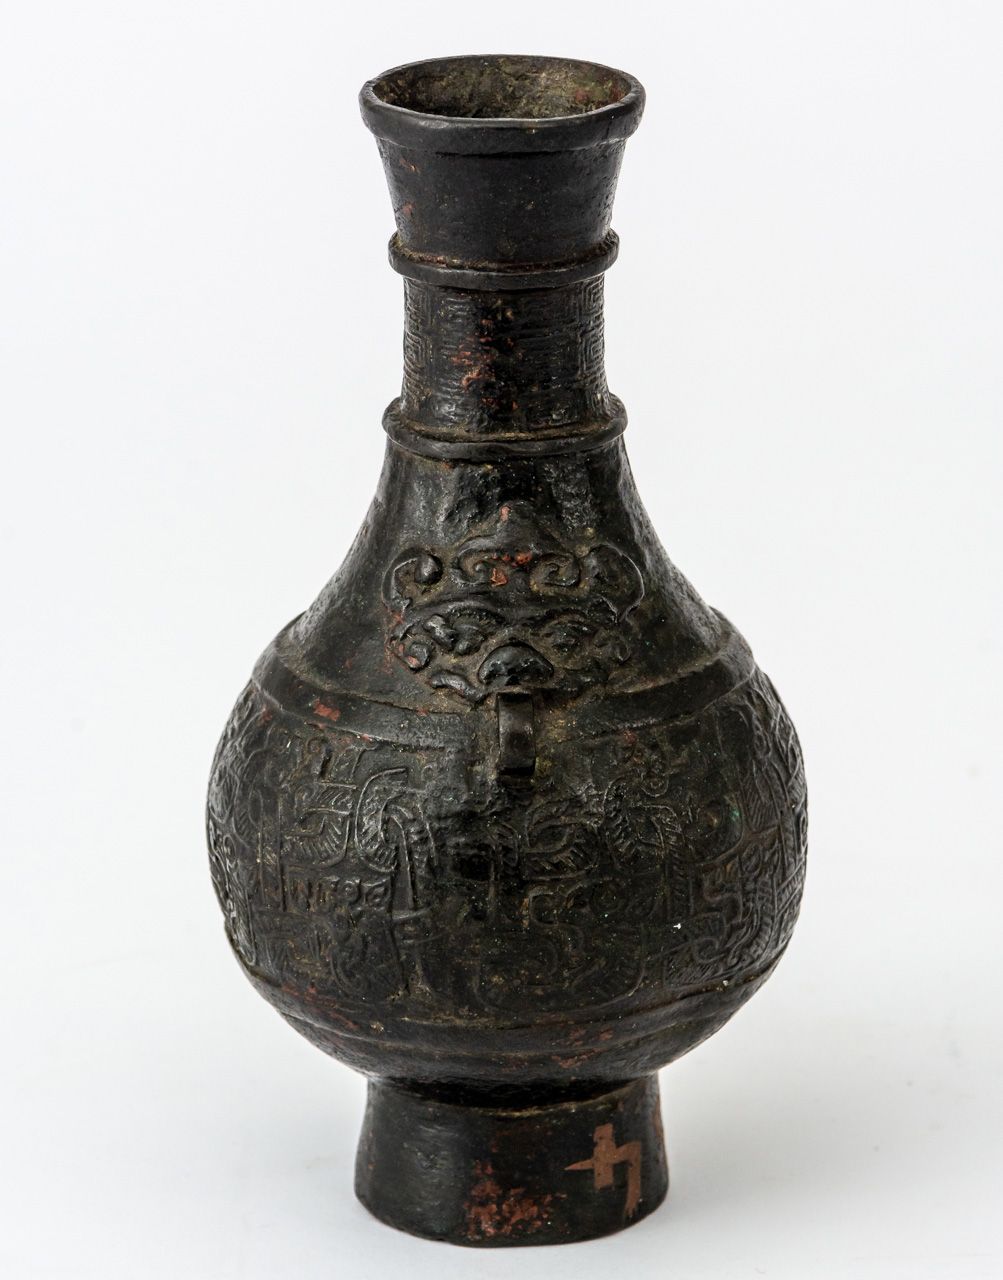 BRONZENE VASE 中国，底座用蜡密封，1800年以前

高14.5厘米